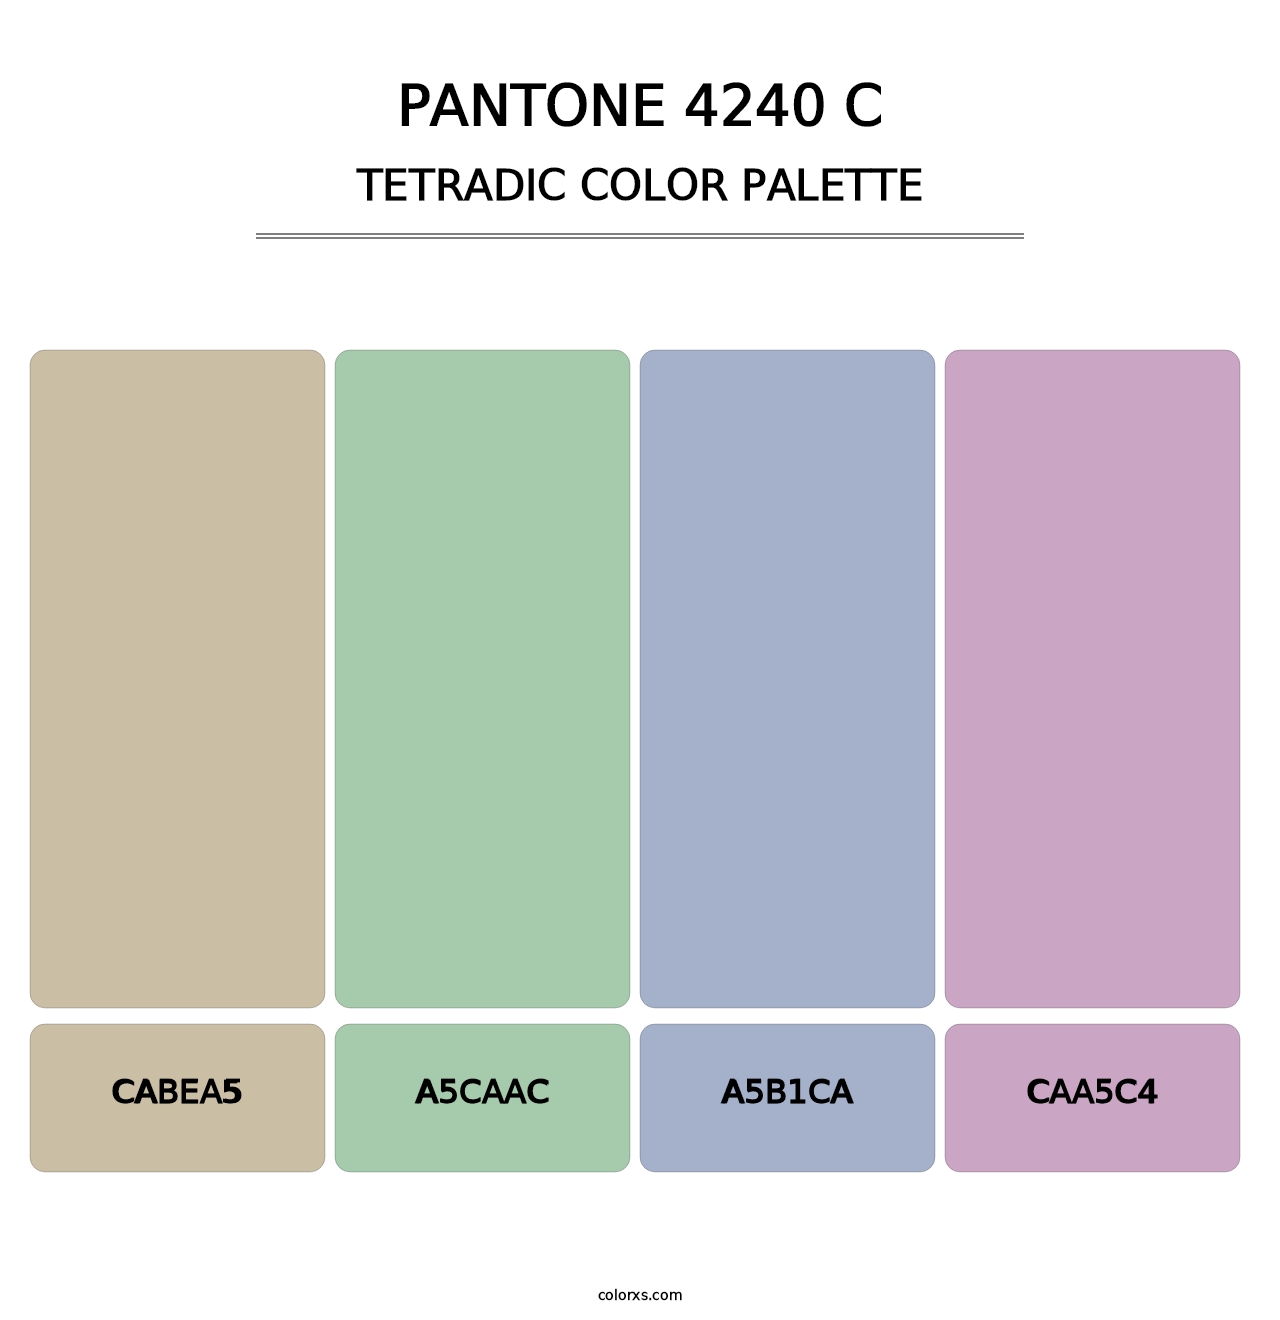 PANTONE 4240 C - Tetradic Color Palette